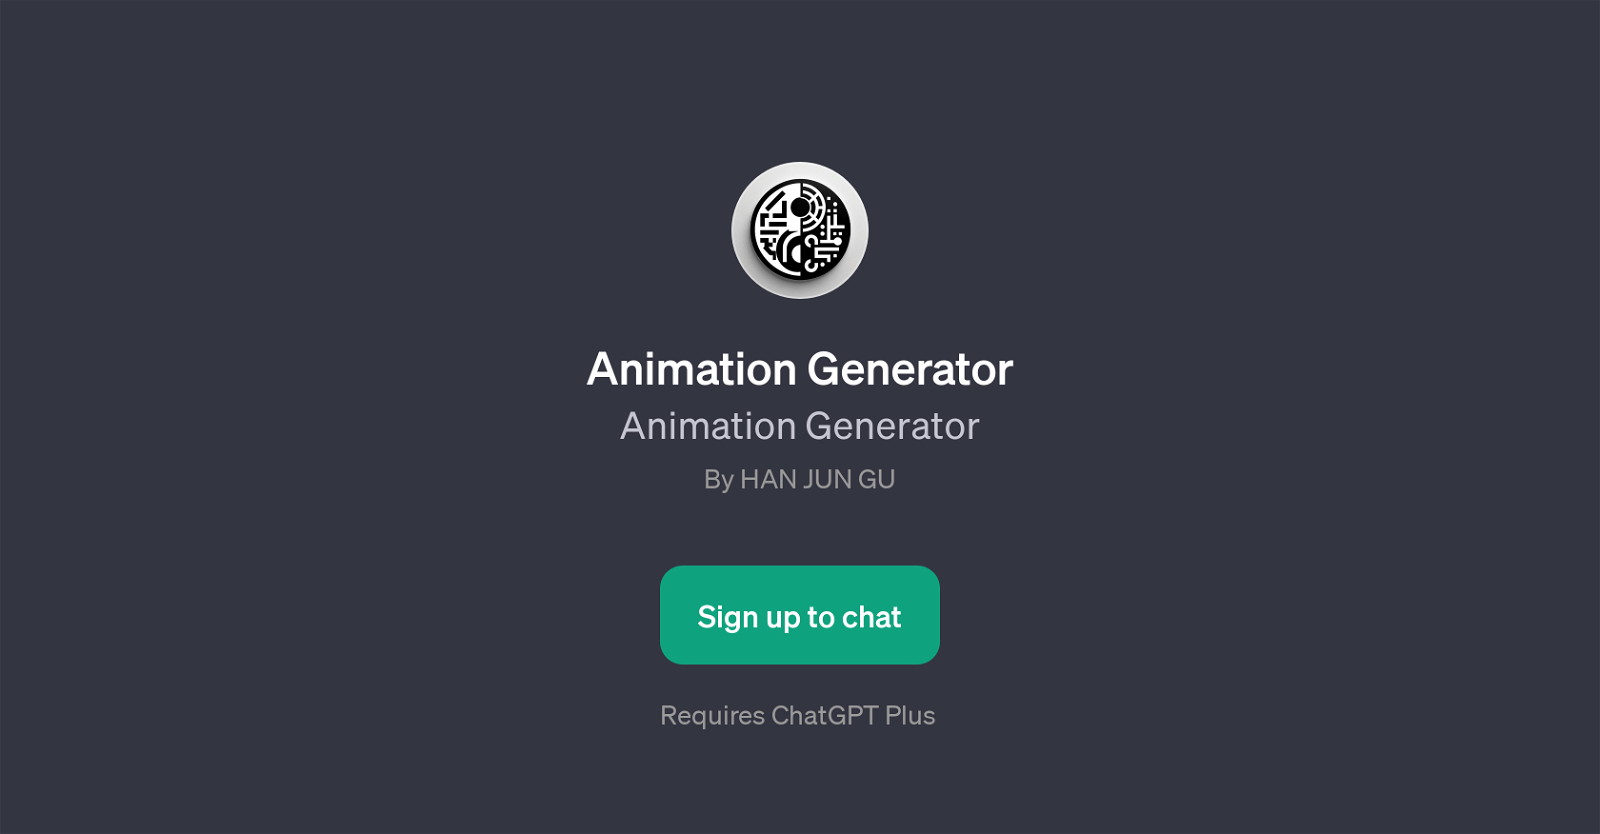 Animation Generator website